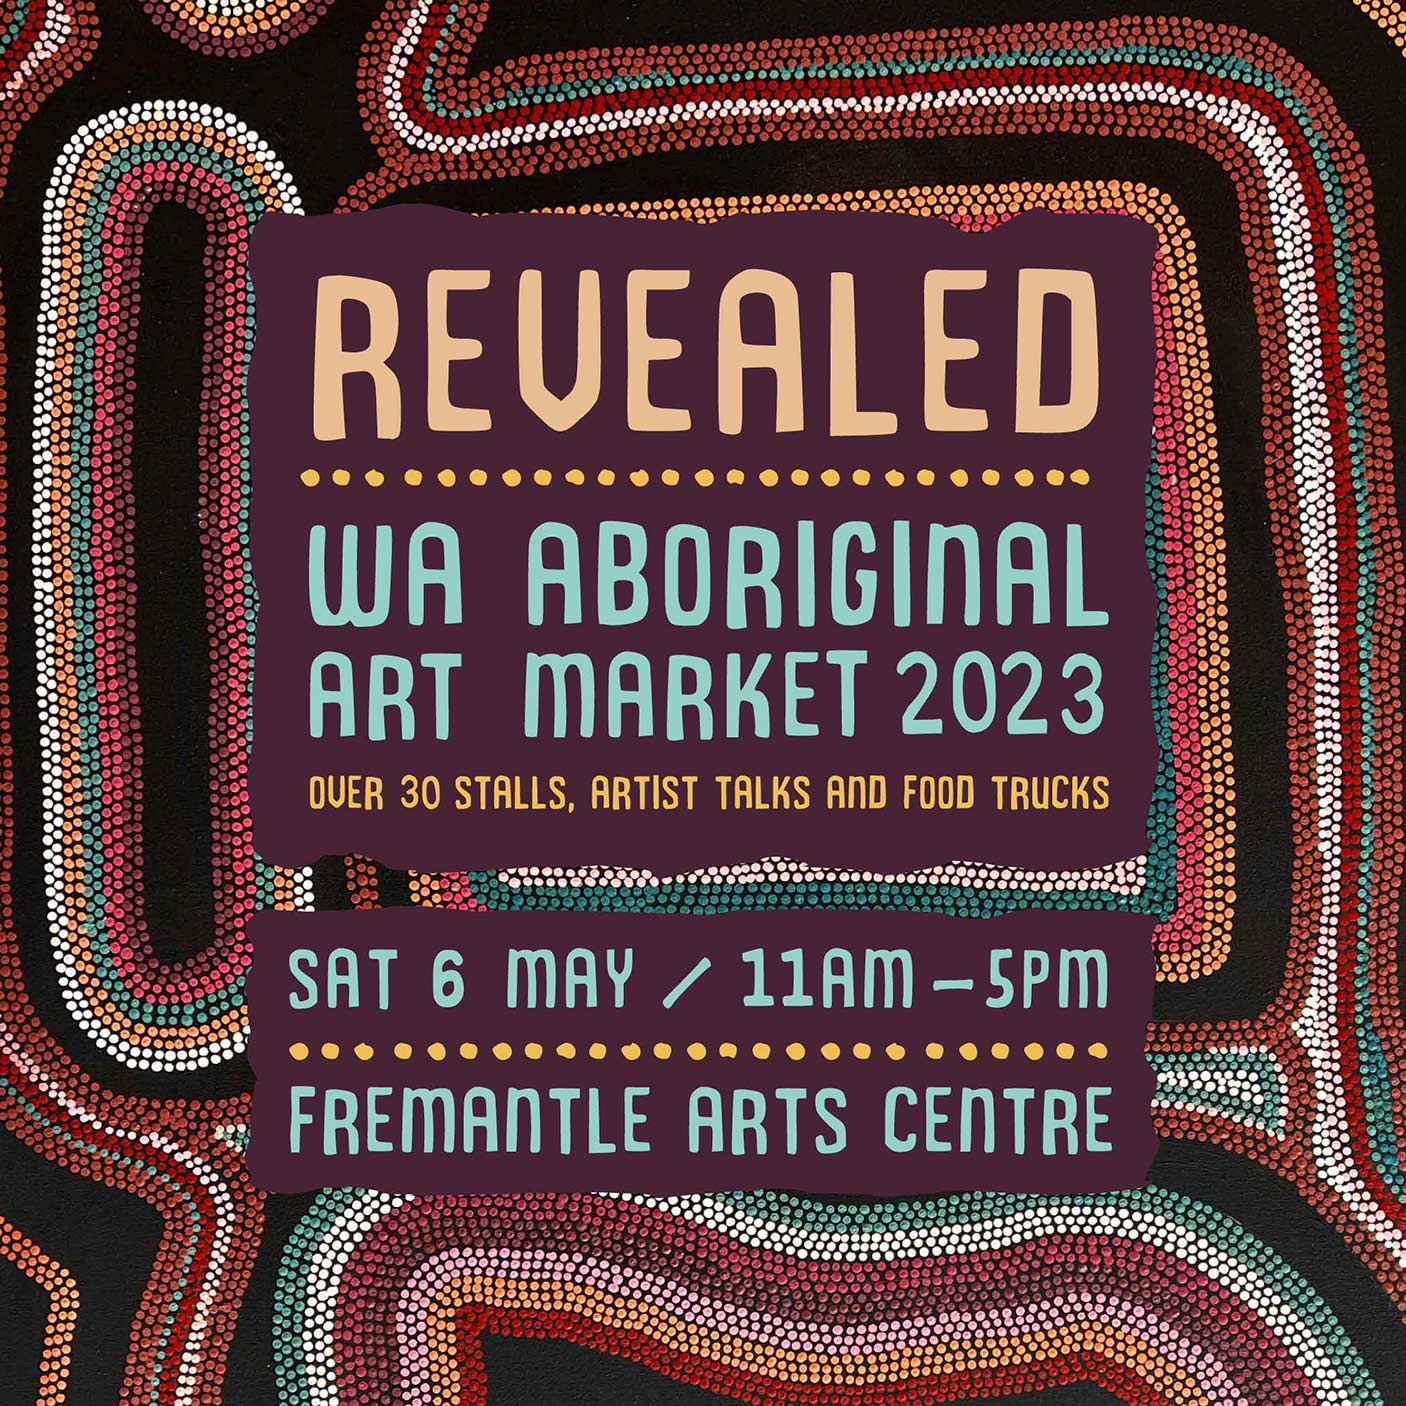 REVEALED WA Aboriginal Art Market